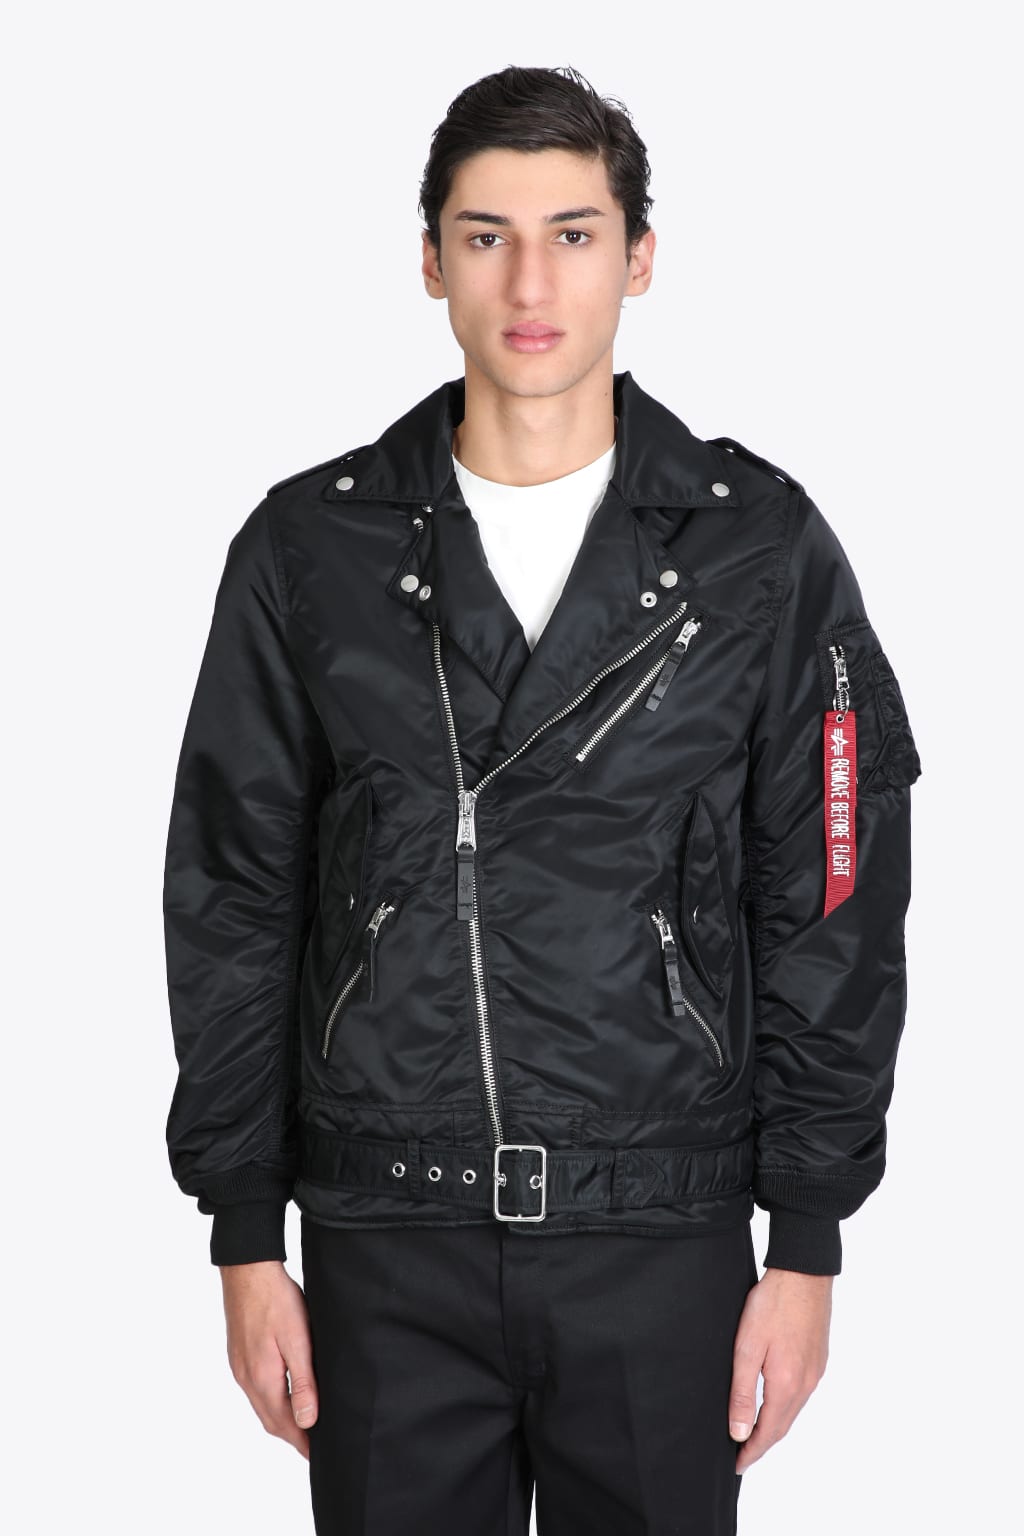 Alpha Industries Outlaw Jacket Black nylon biker jacket with belt - OUTLAW JACKET